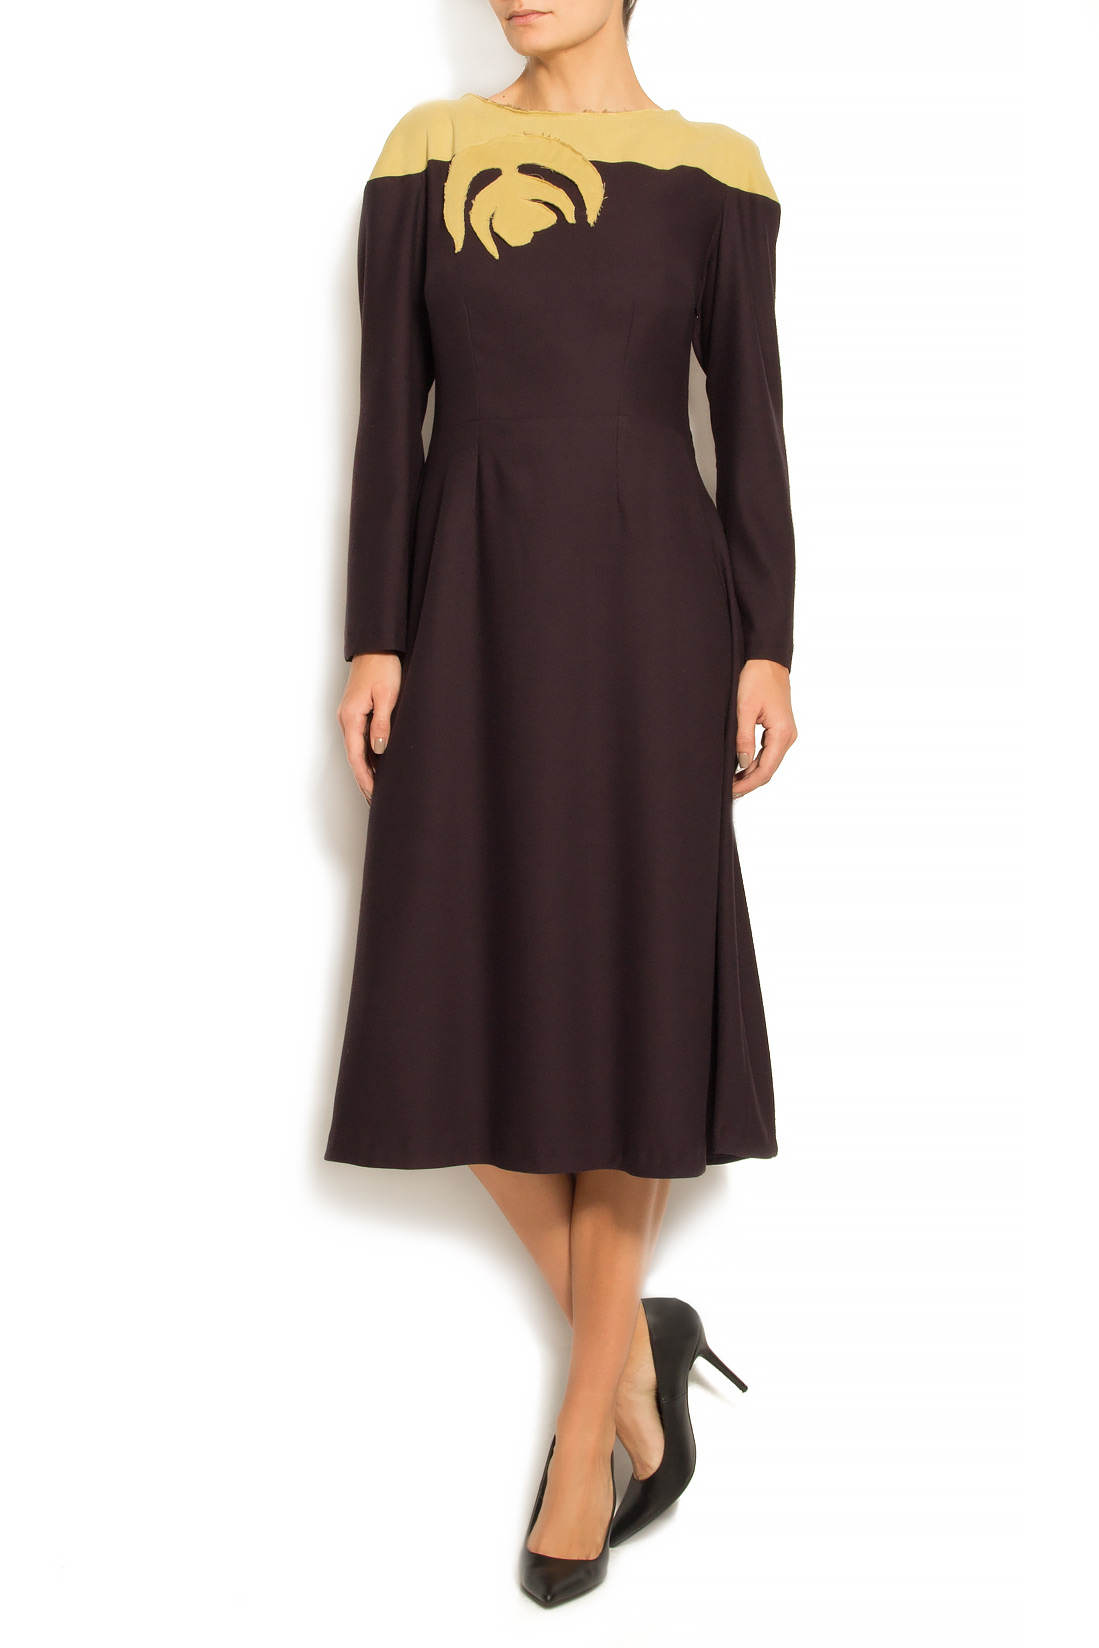 Cotton, wool-blend and cashmere dress Lena Criveanu image 0